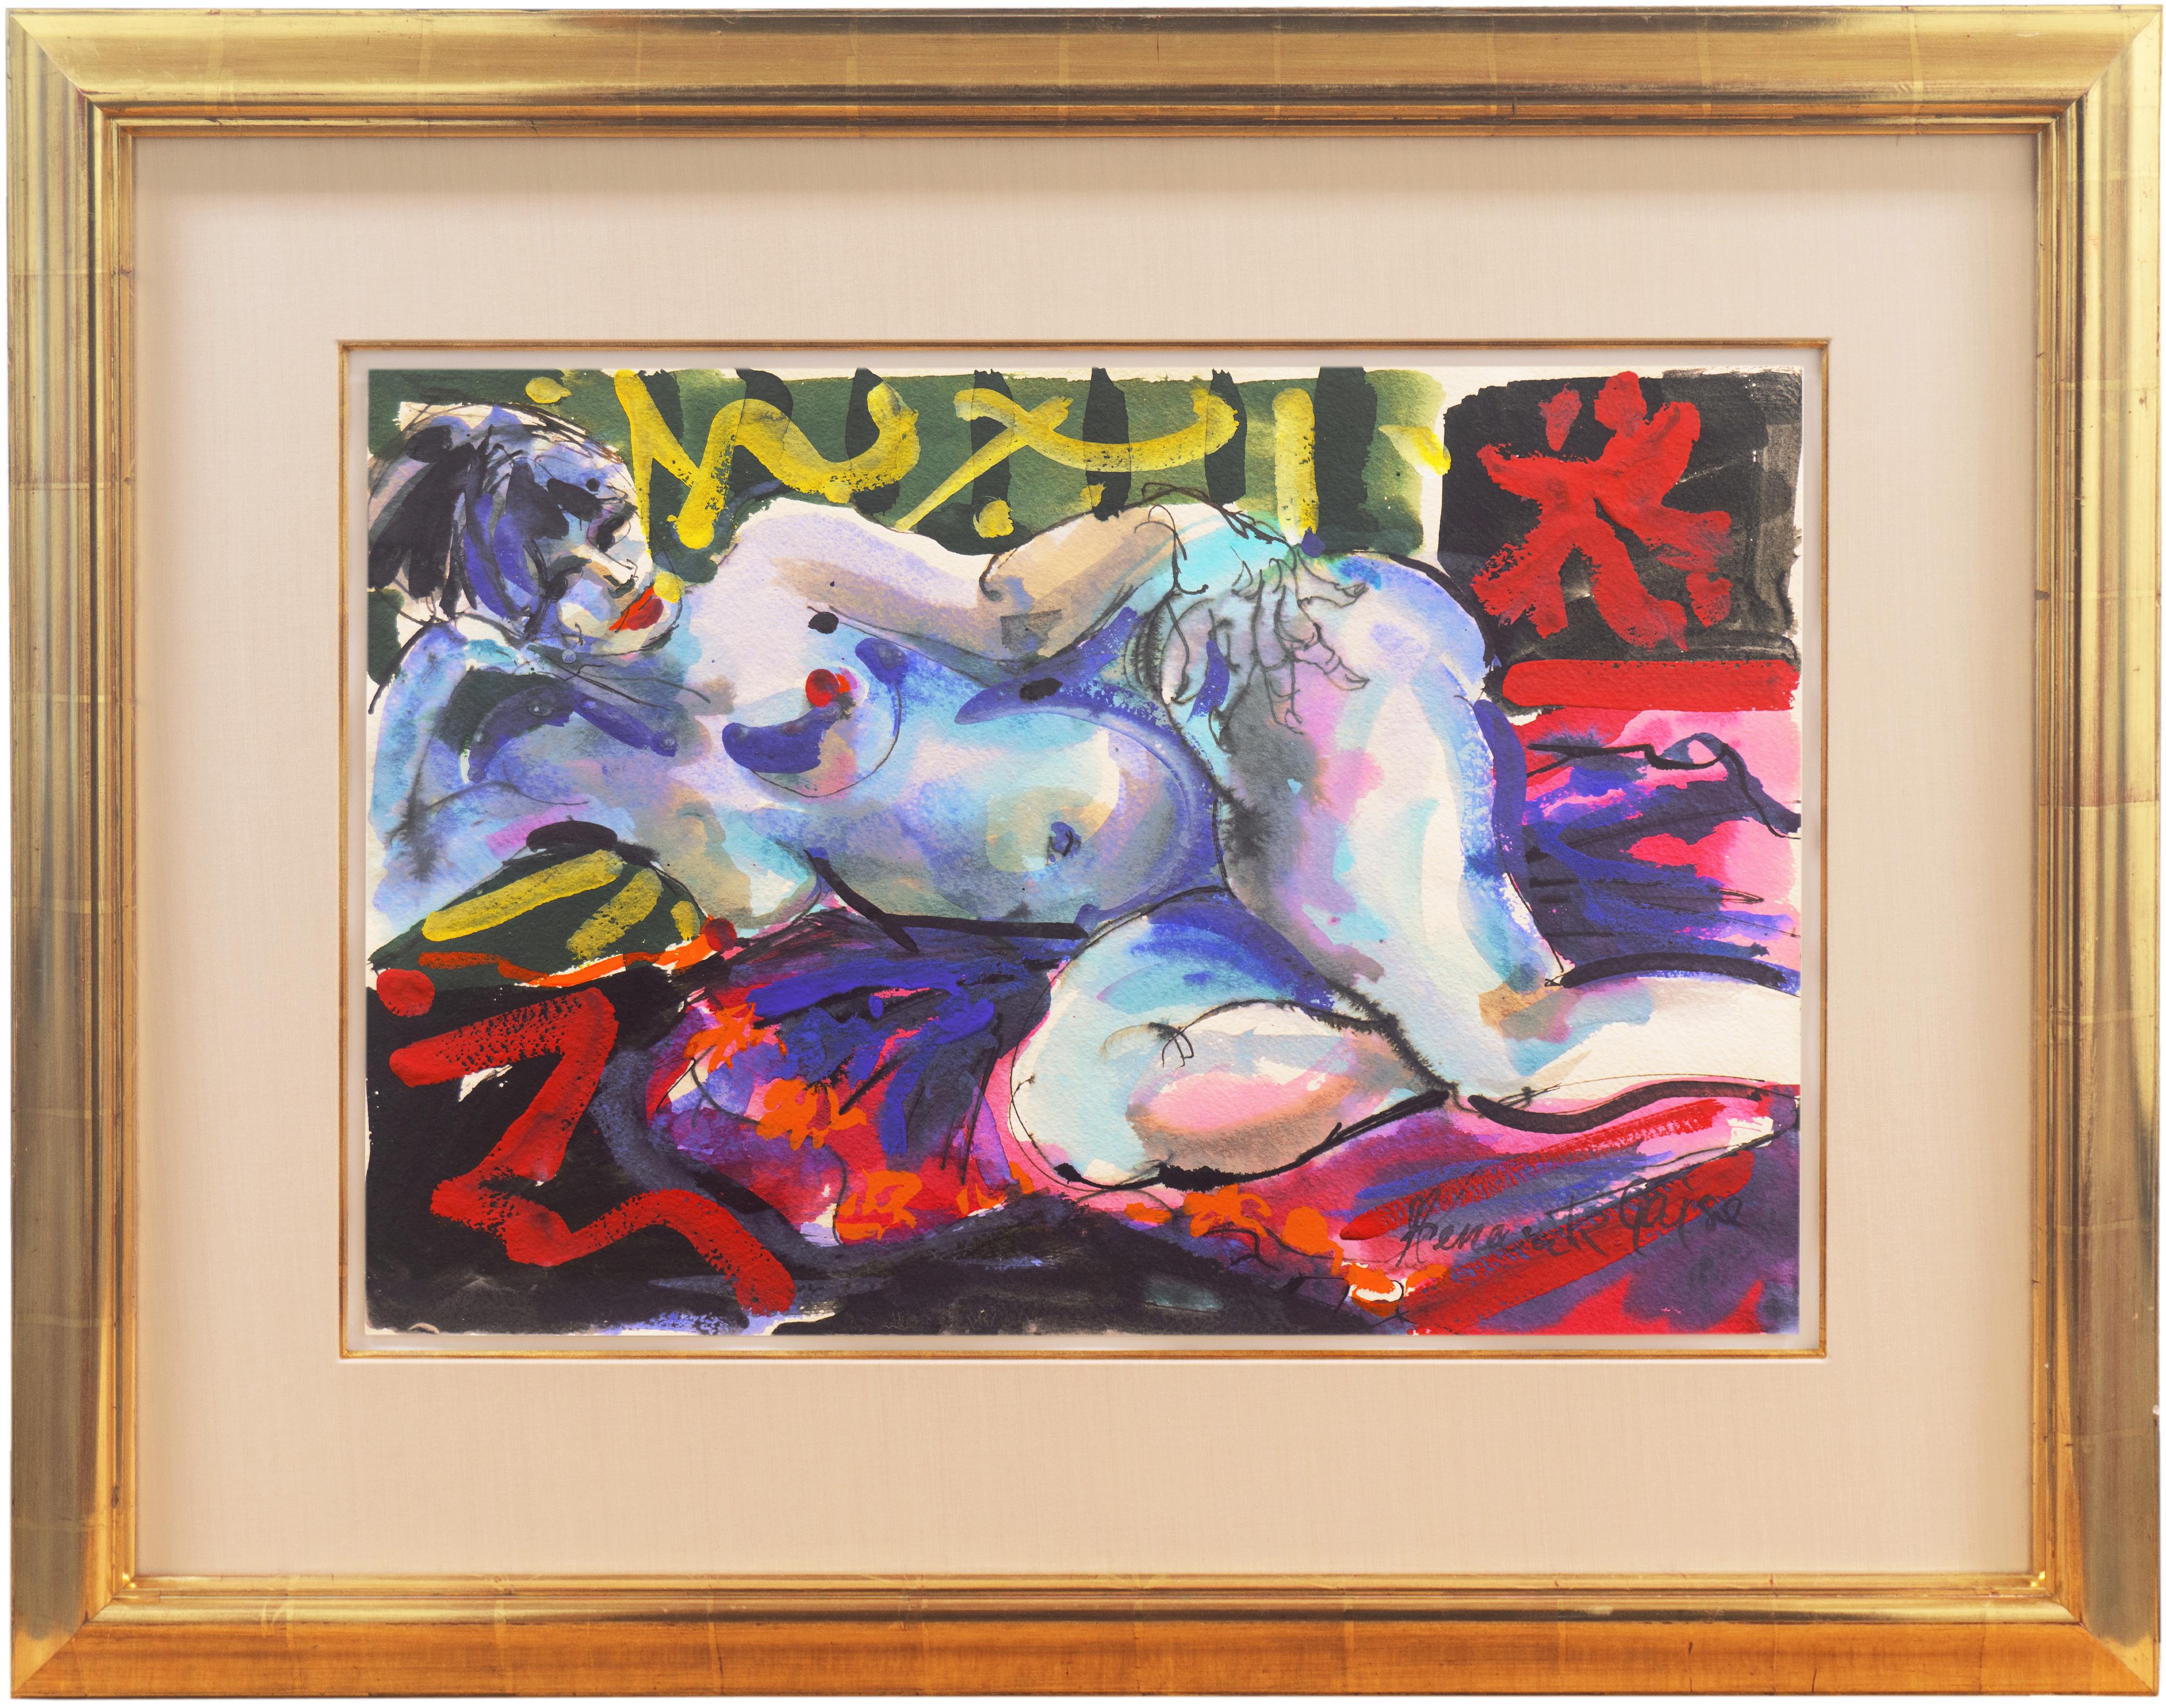 'Reclining Nude', California Expressionist, Art Institute of Chicago 1